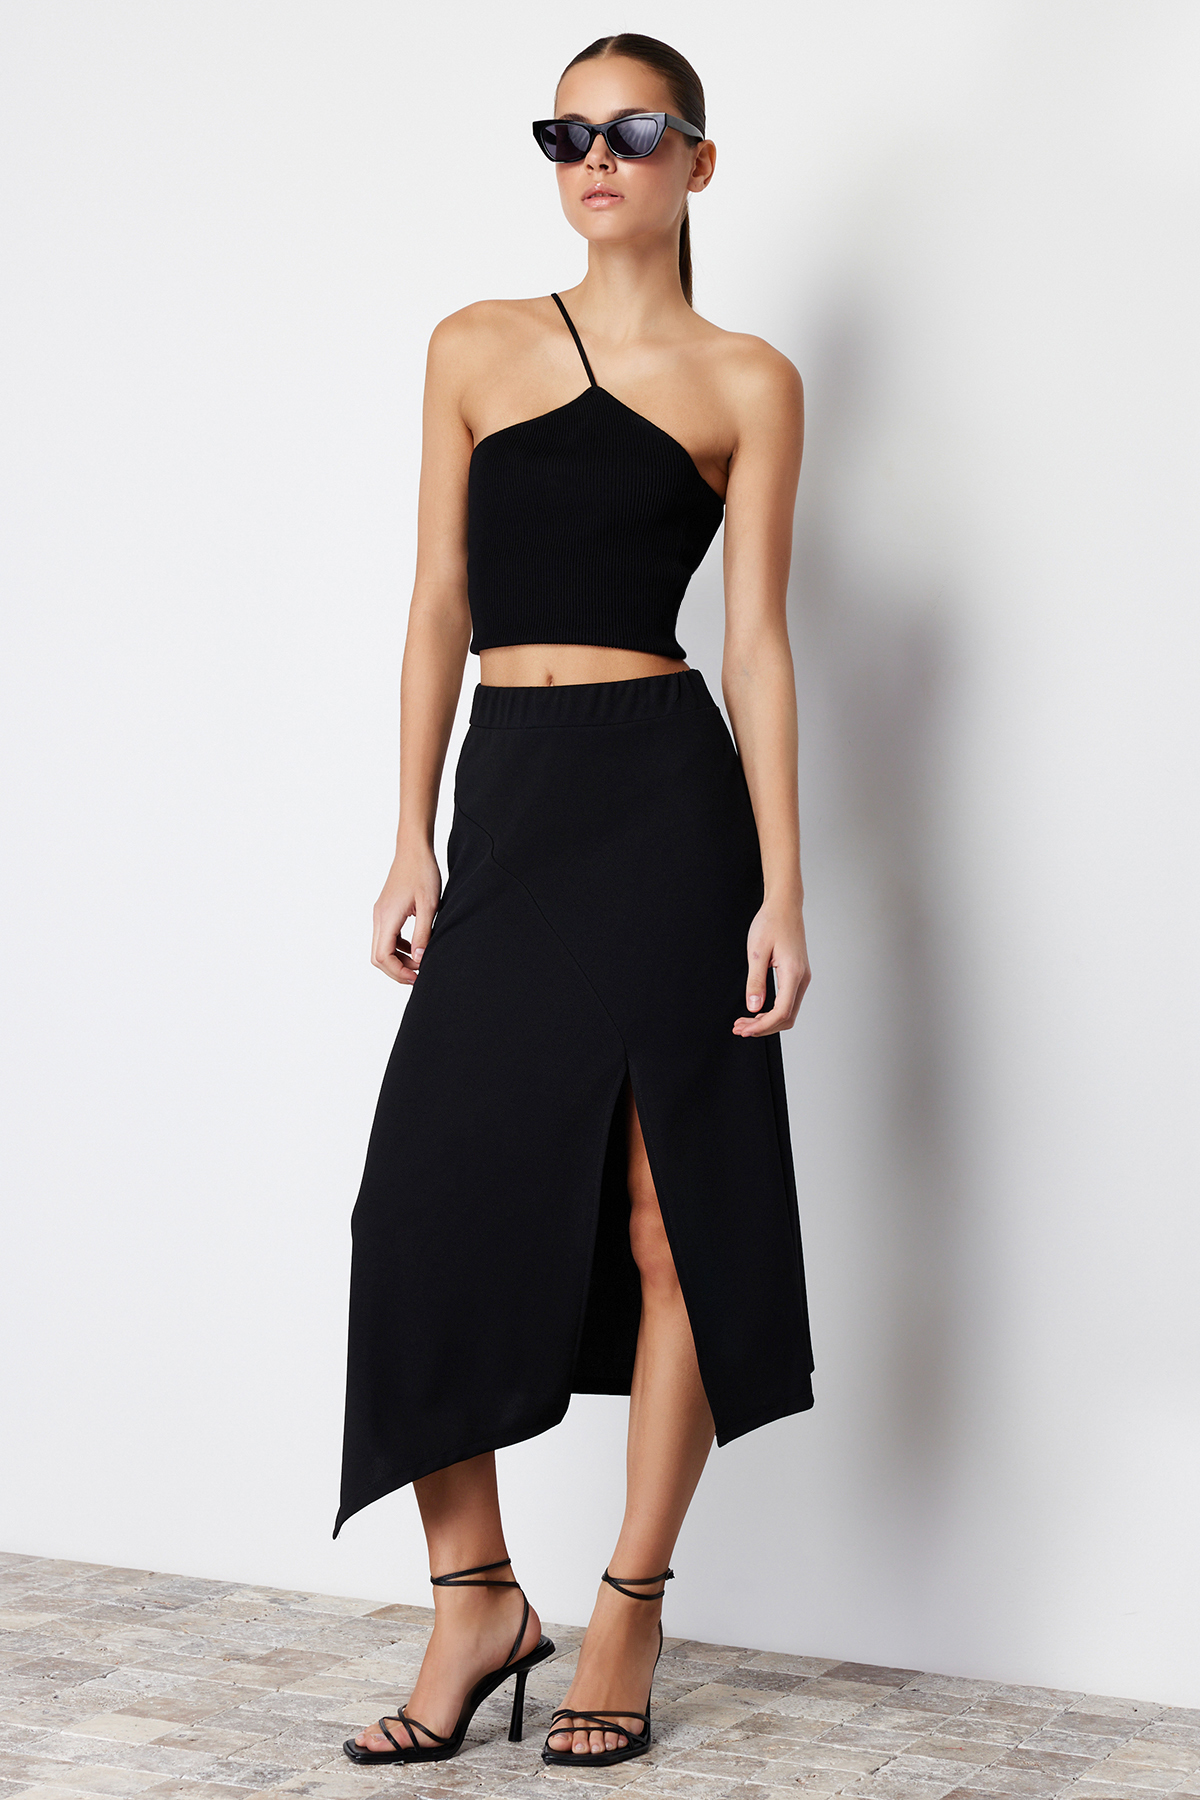 Trendyol Black Asymmetrical Cut and Slit Detailed Maxi Skirt